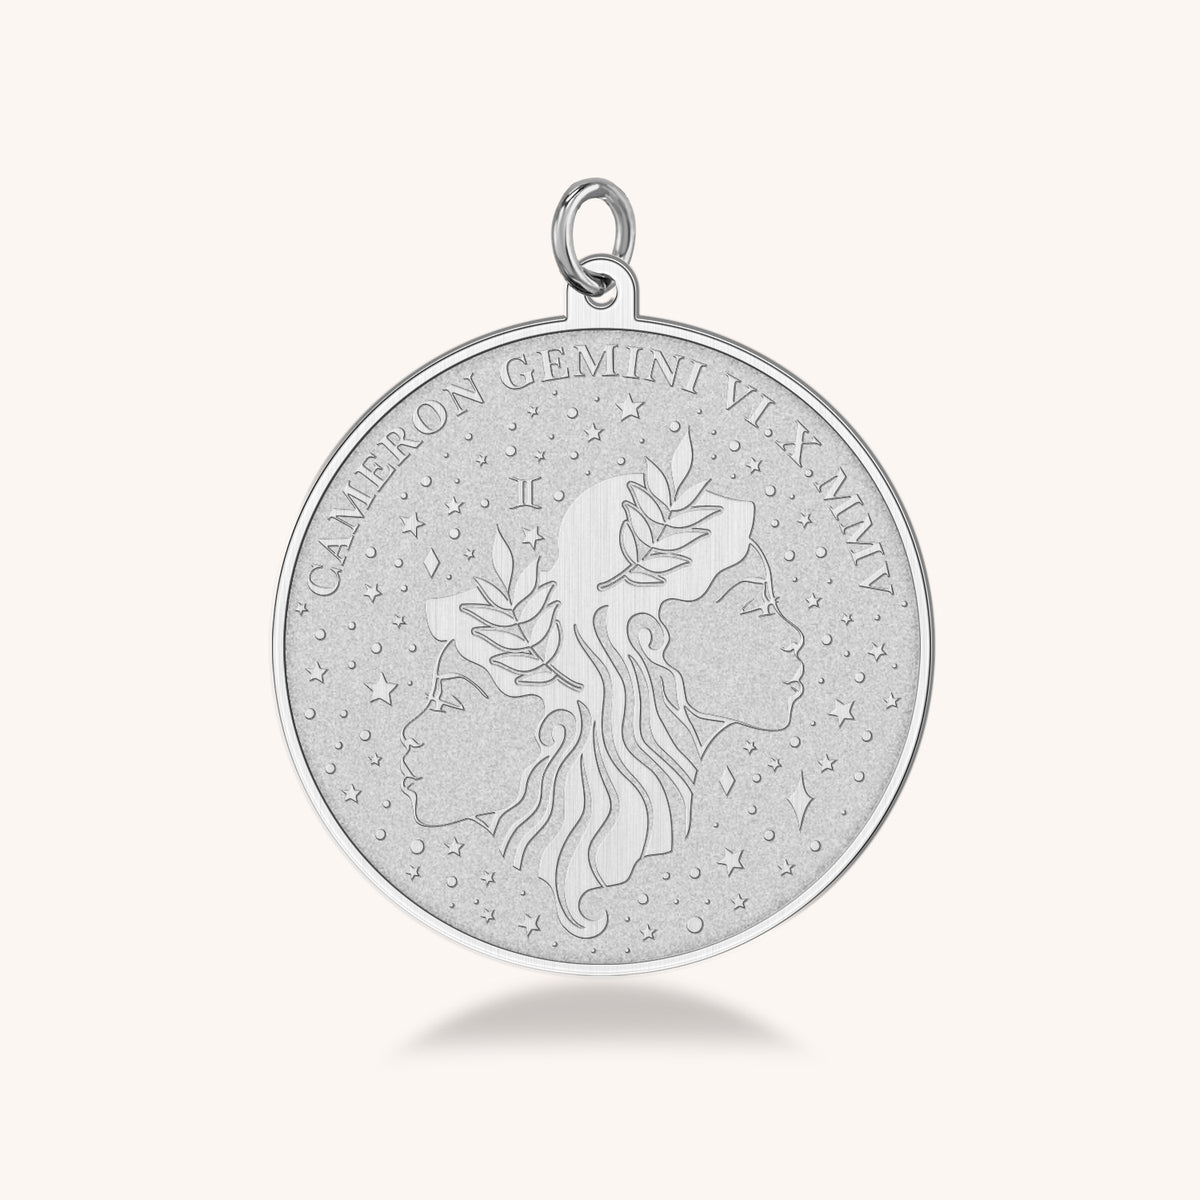 Gemini Zodiac Medallion Necklace